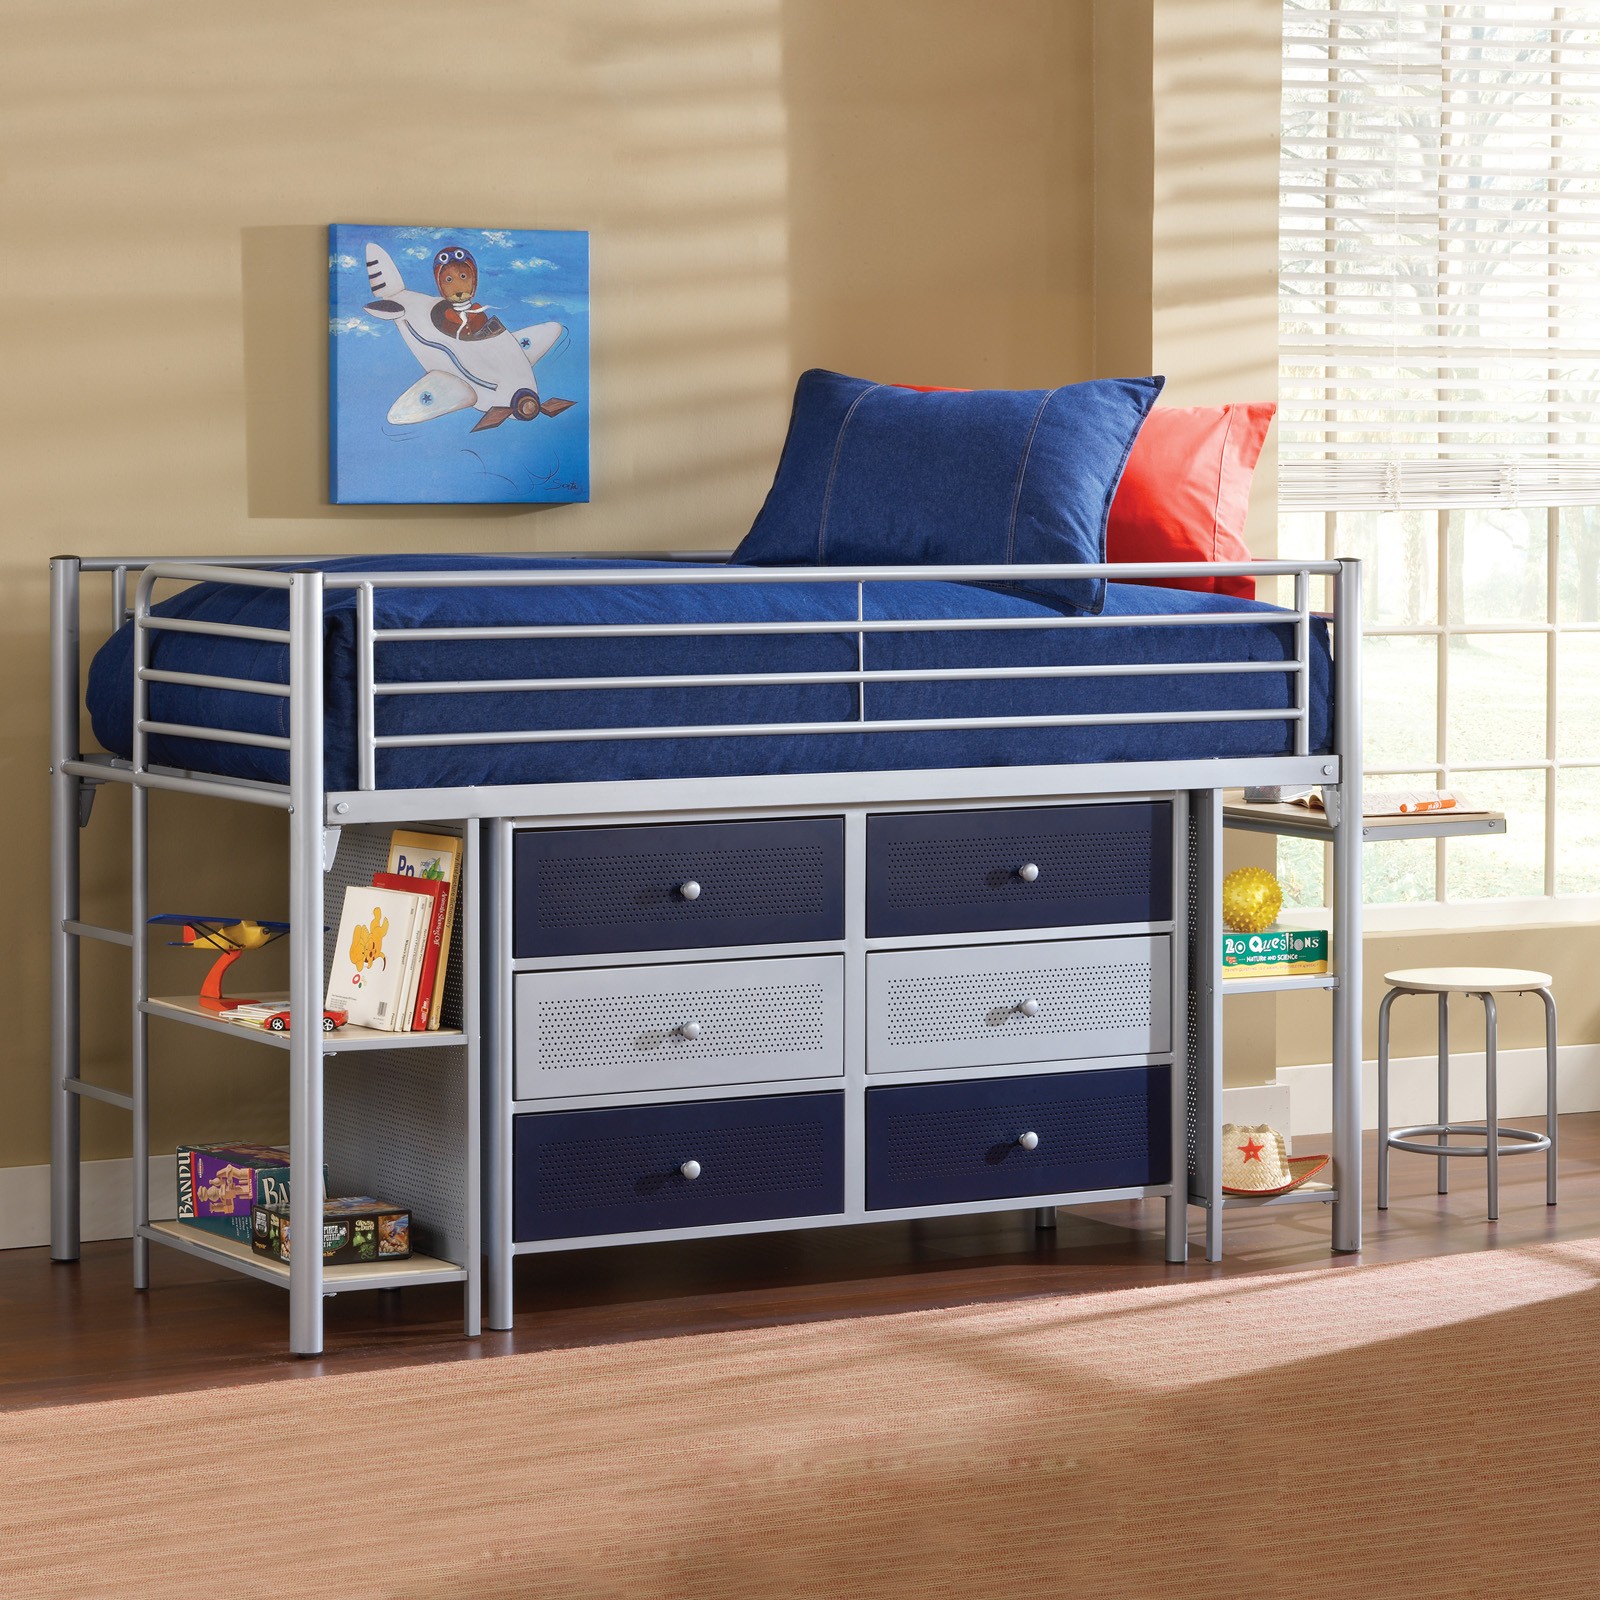 Loft bed with dresser 2